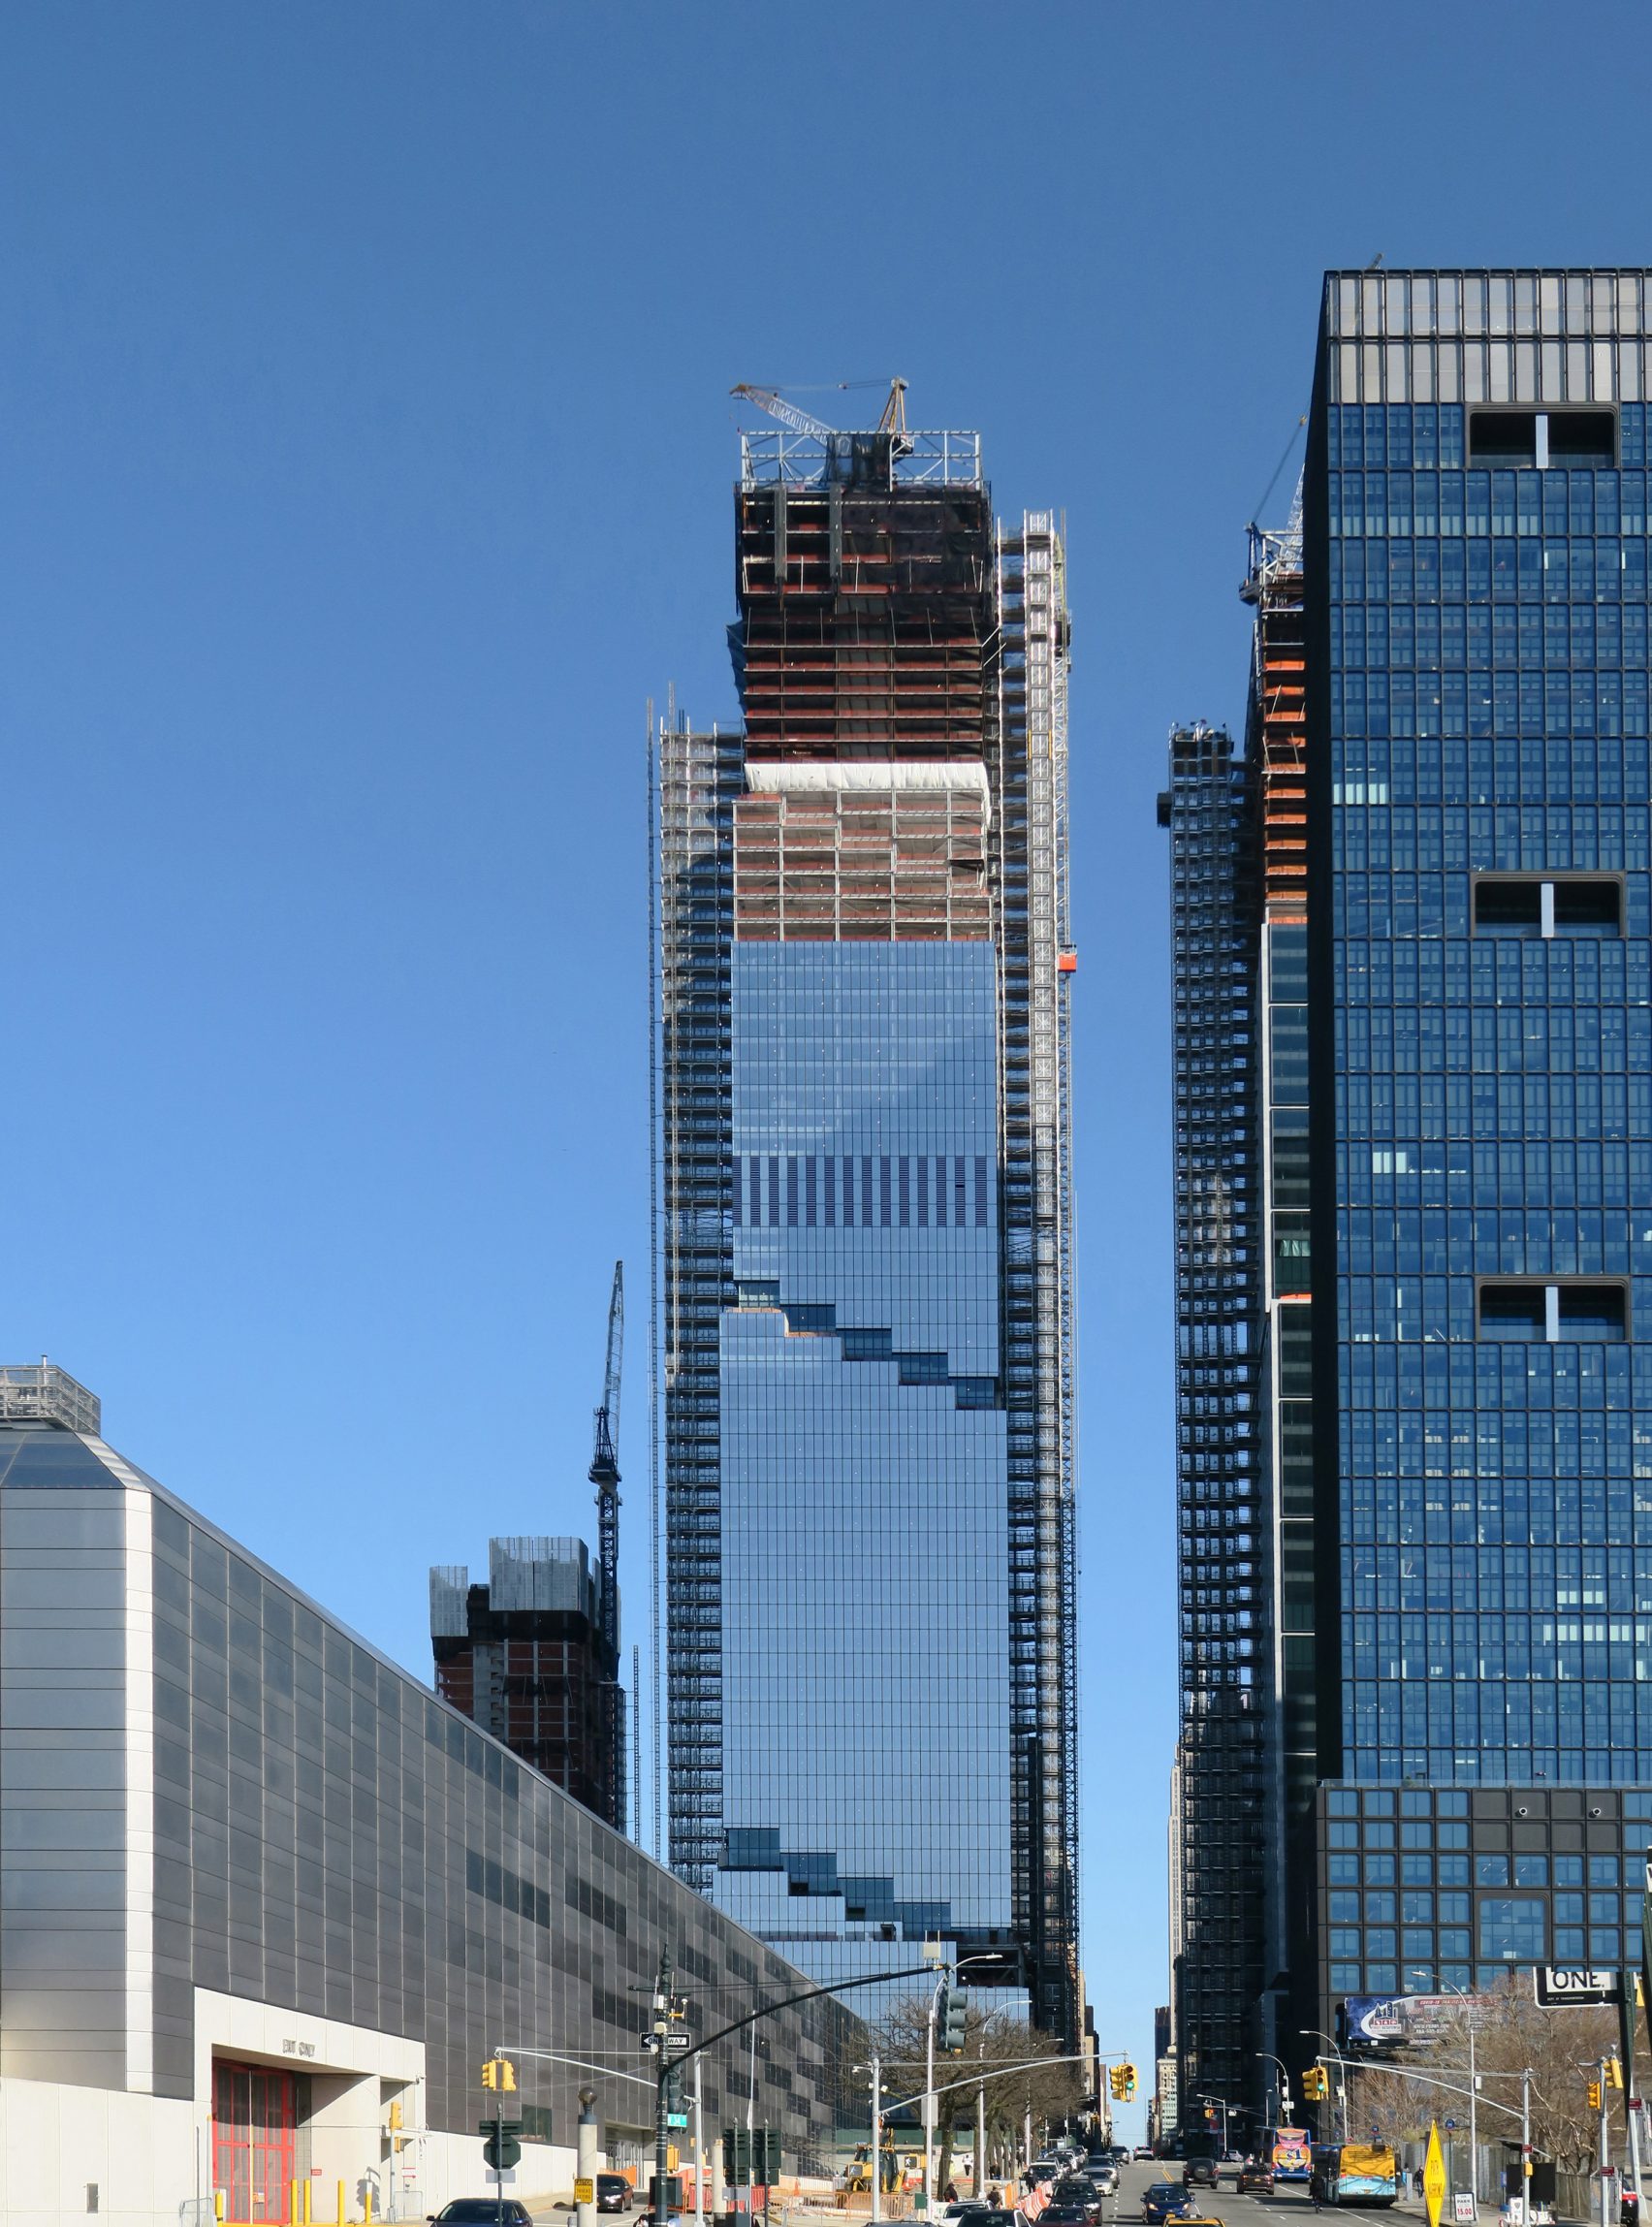 Photos Reveal Bigs Supertall Skyscraper The Spiral Under Construction